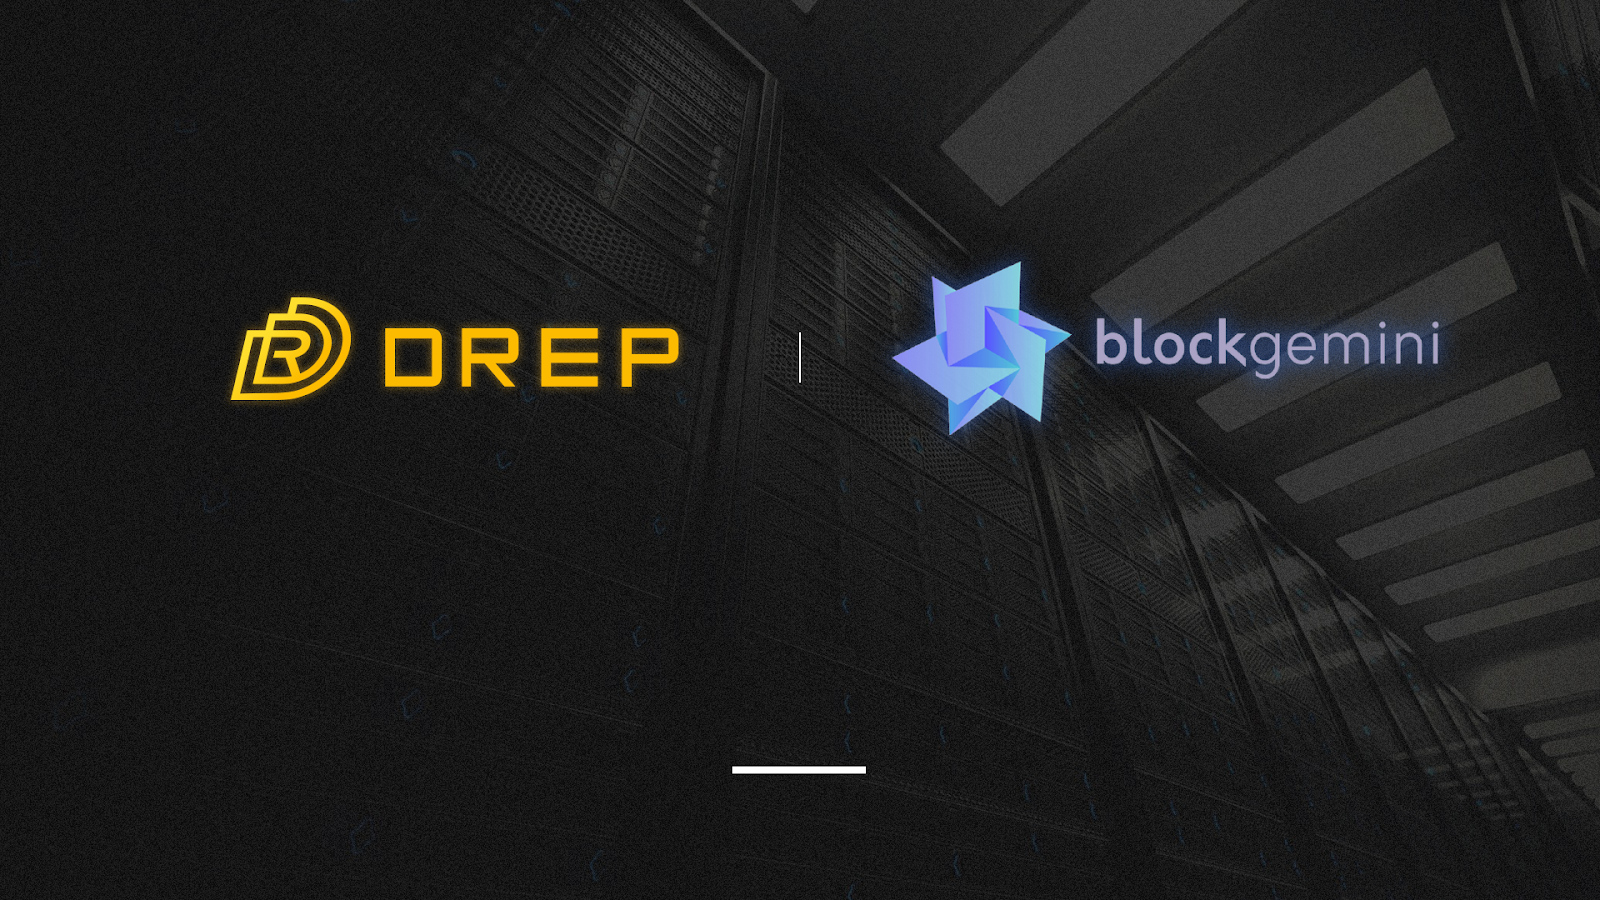 DREP to Partner with Dubai Blockchain Solution Provider Block Gemini and Support Dubai’s 2020 Blockchain Strategy